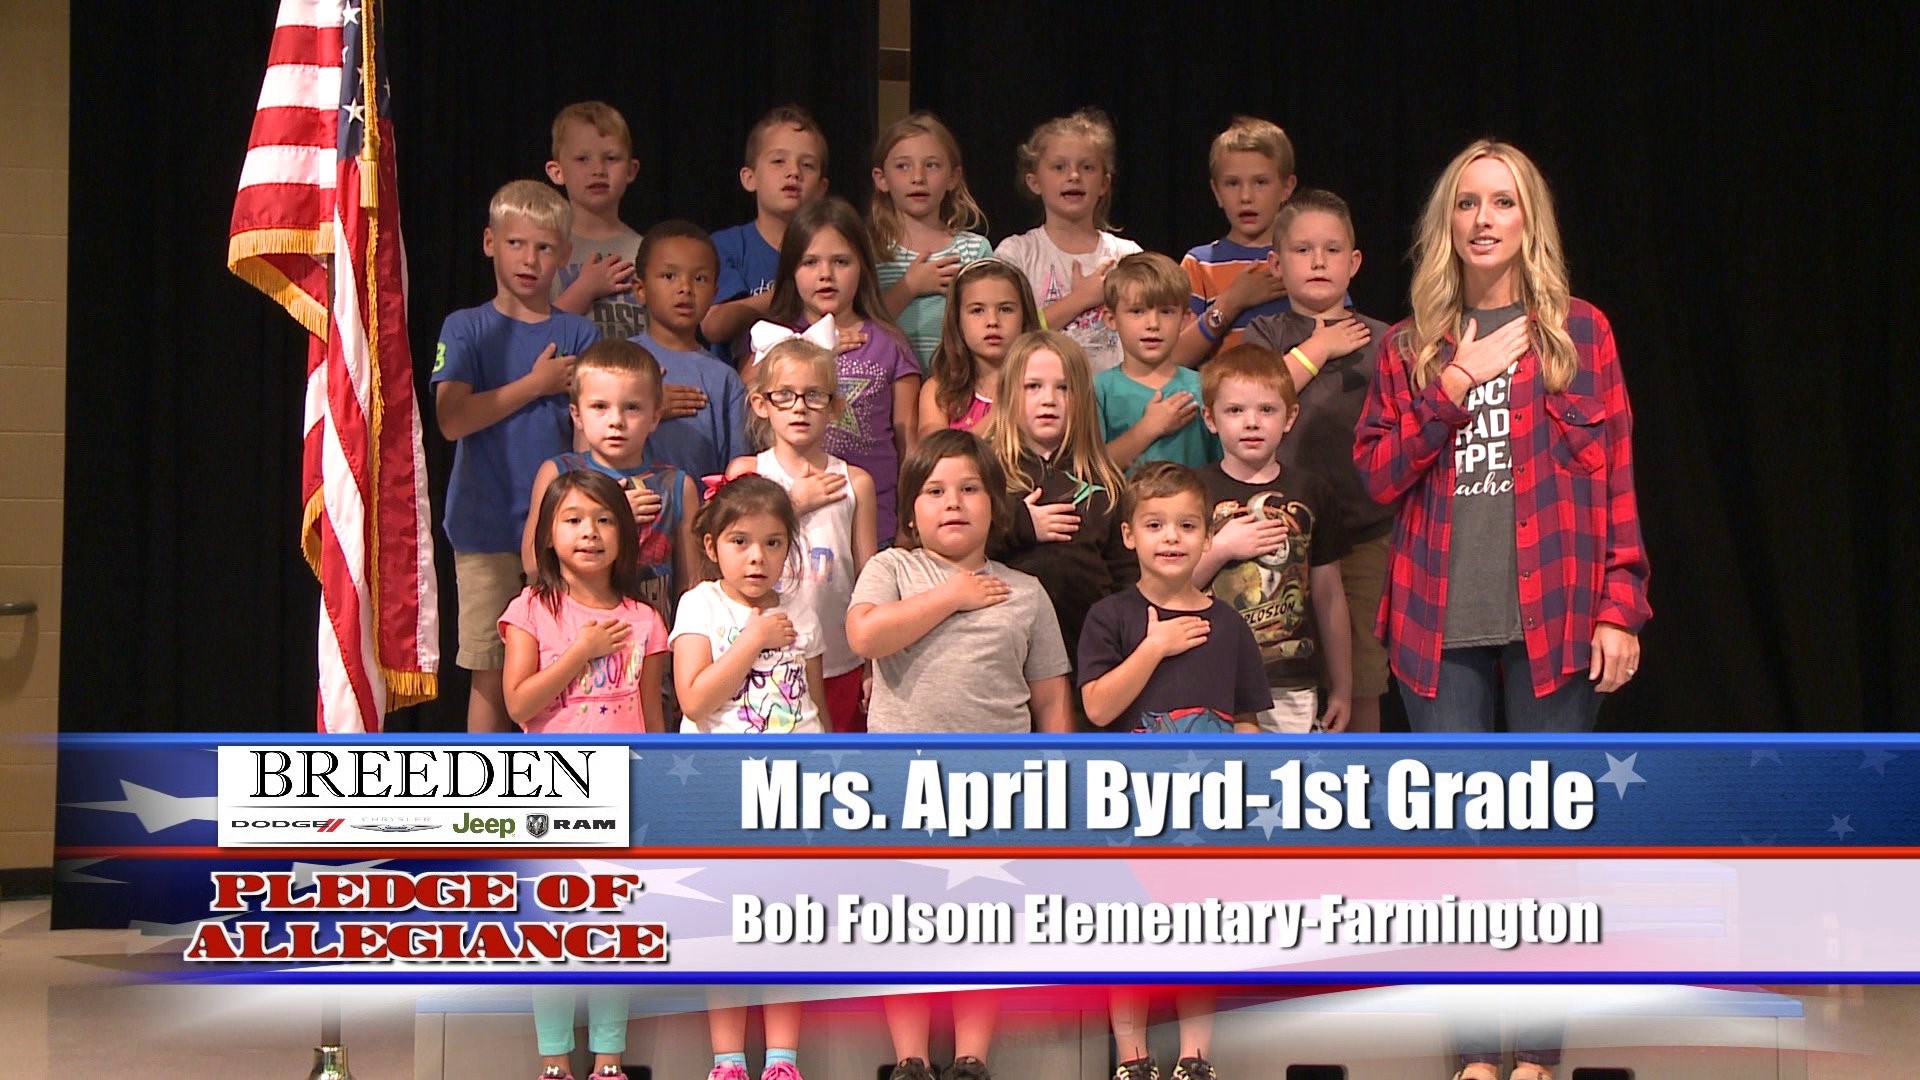 Mrs. April Byrd - 1st Grade  Bob Folsom Elementary  Farmington